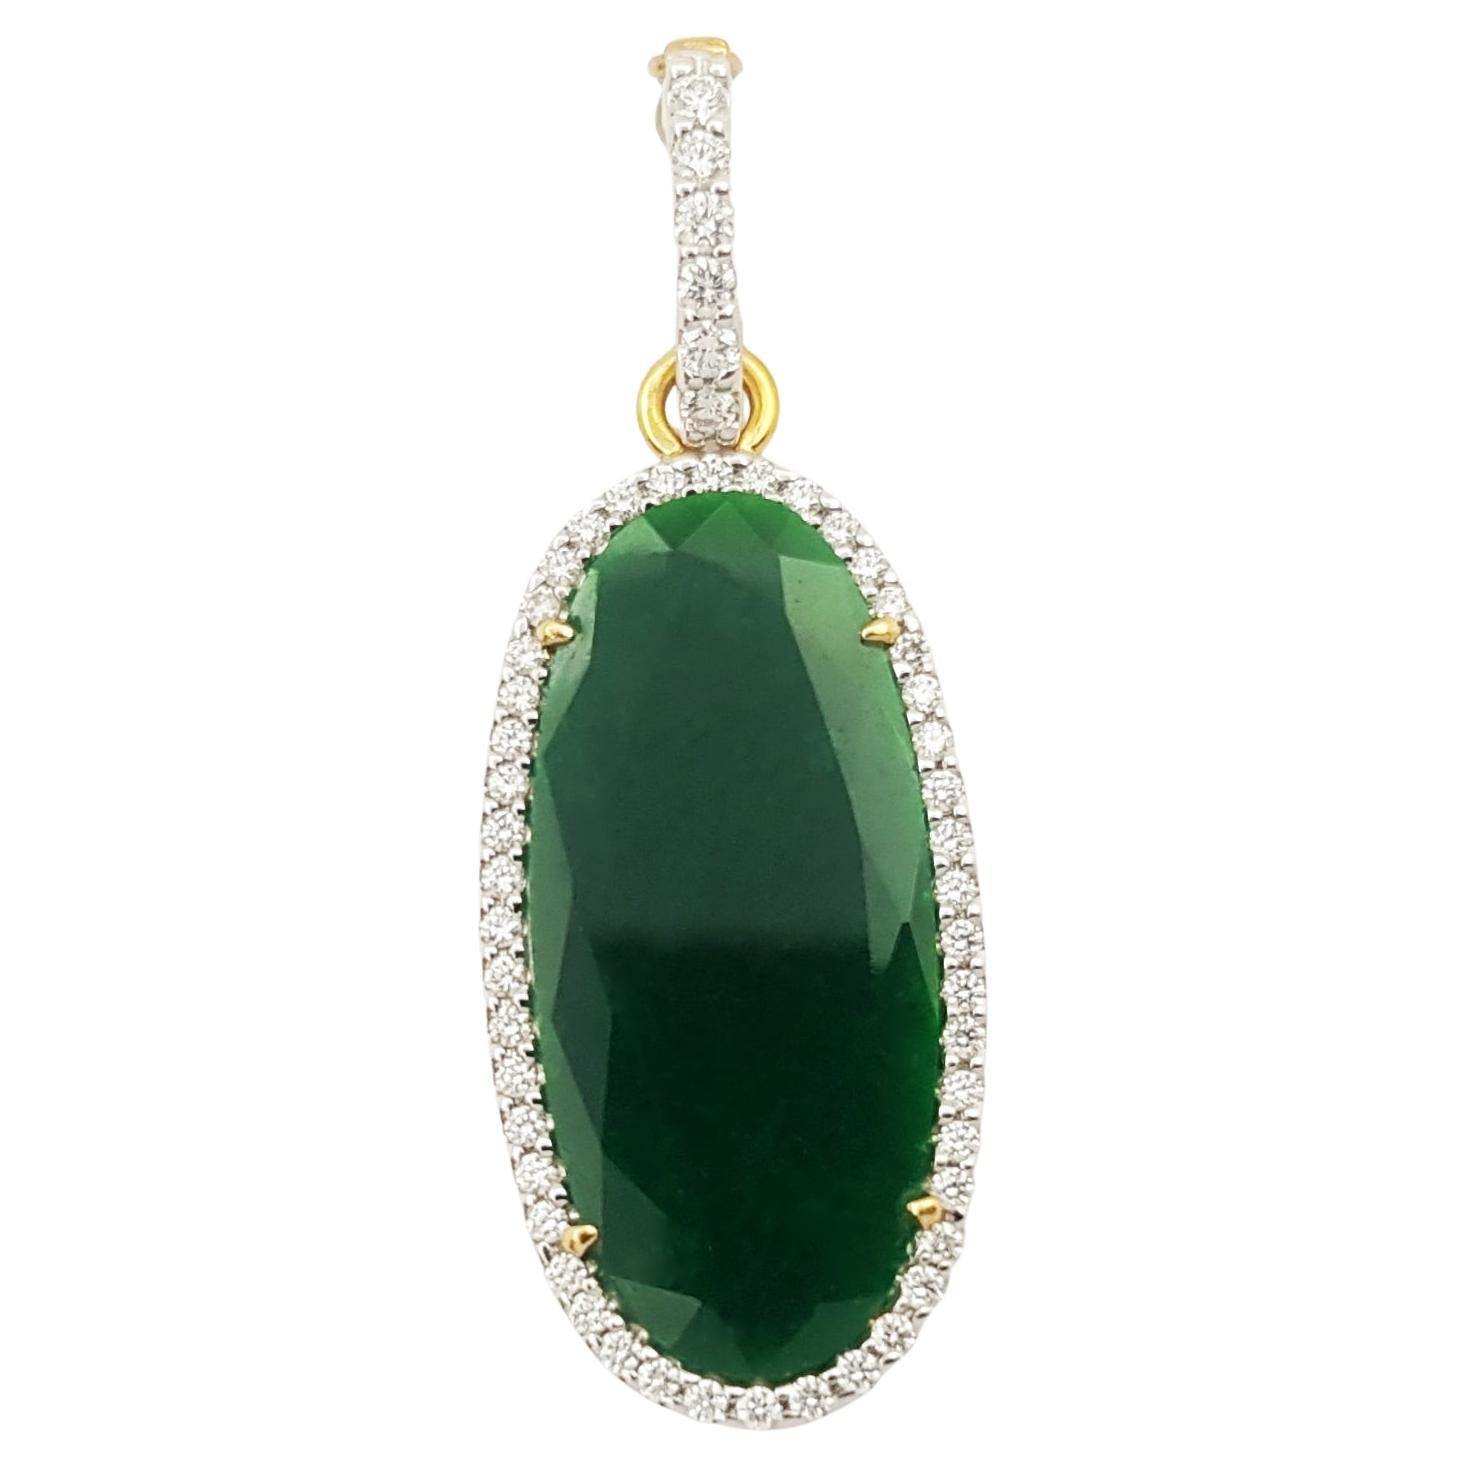 Jade et diamants sertis dans des montures en or 18 carats